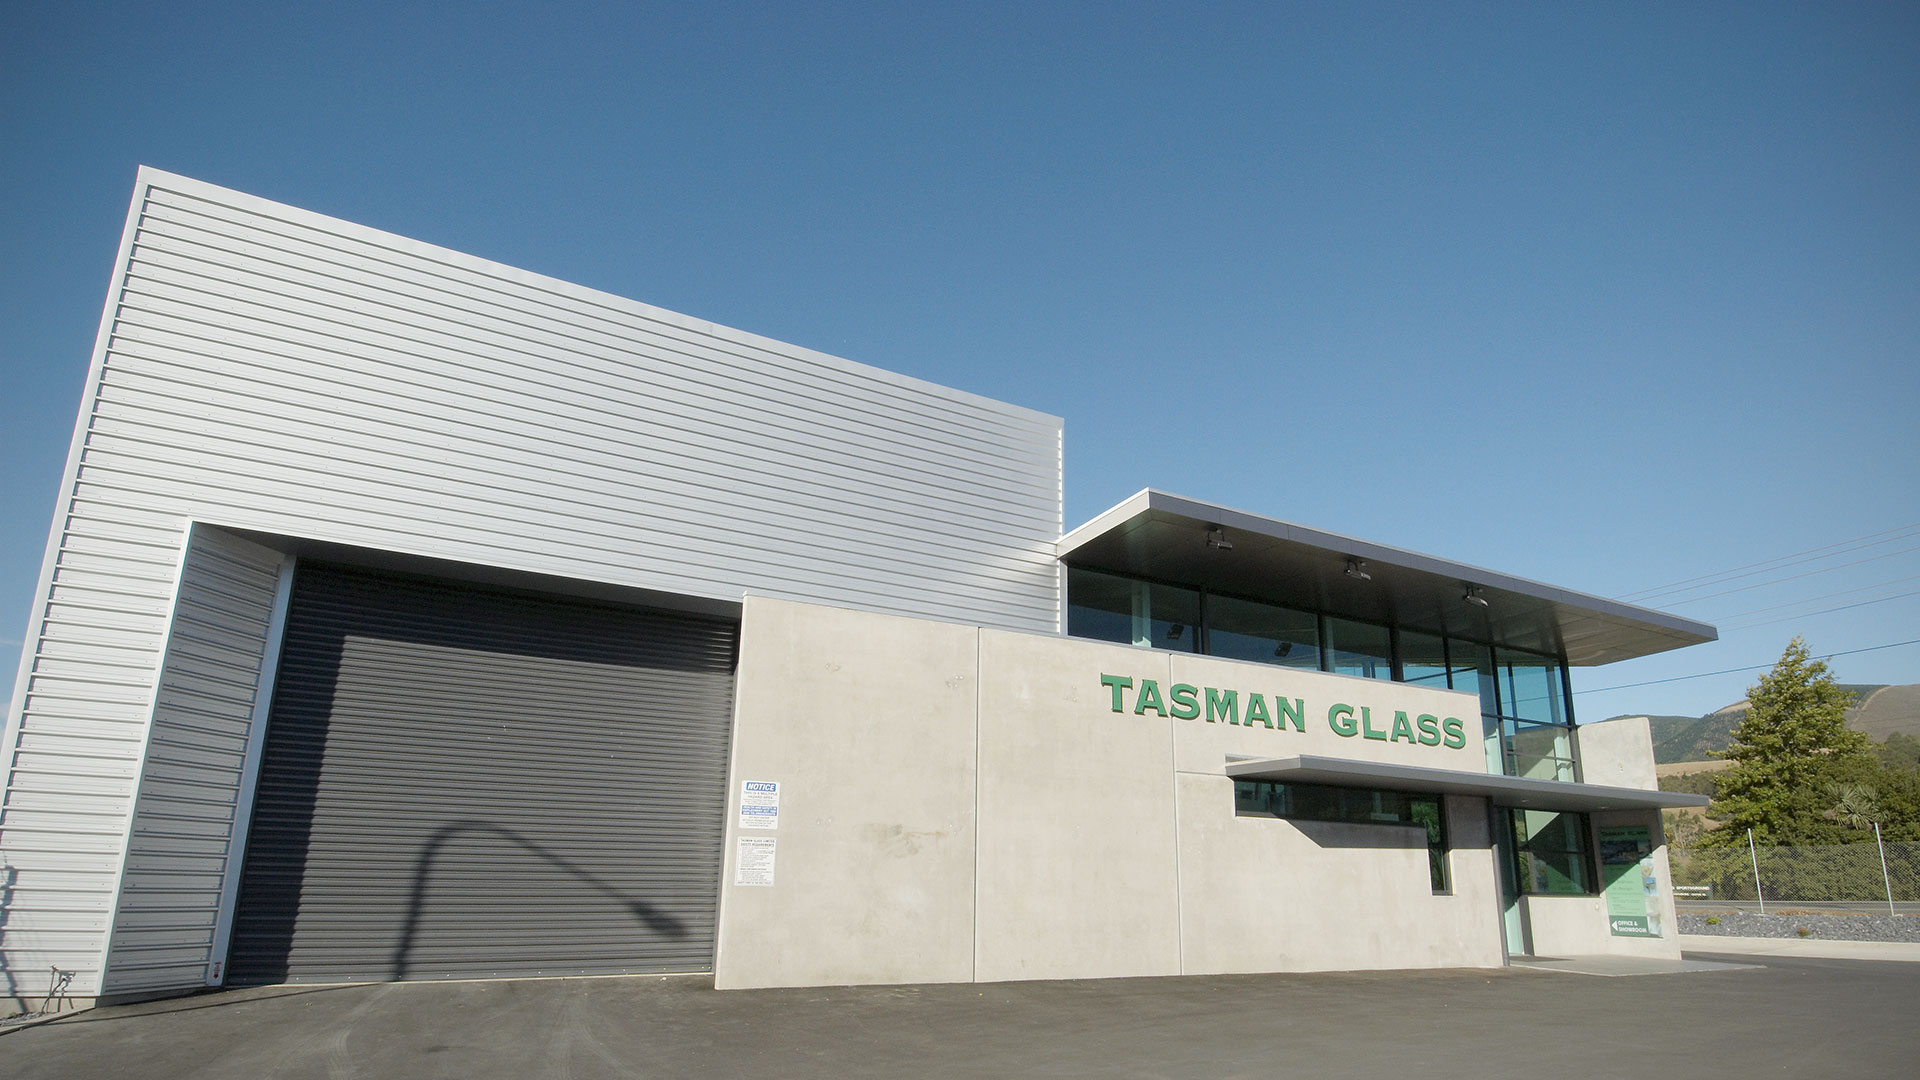 Tasman Glass designed by Matz Architects